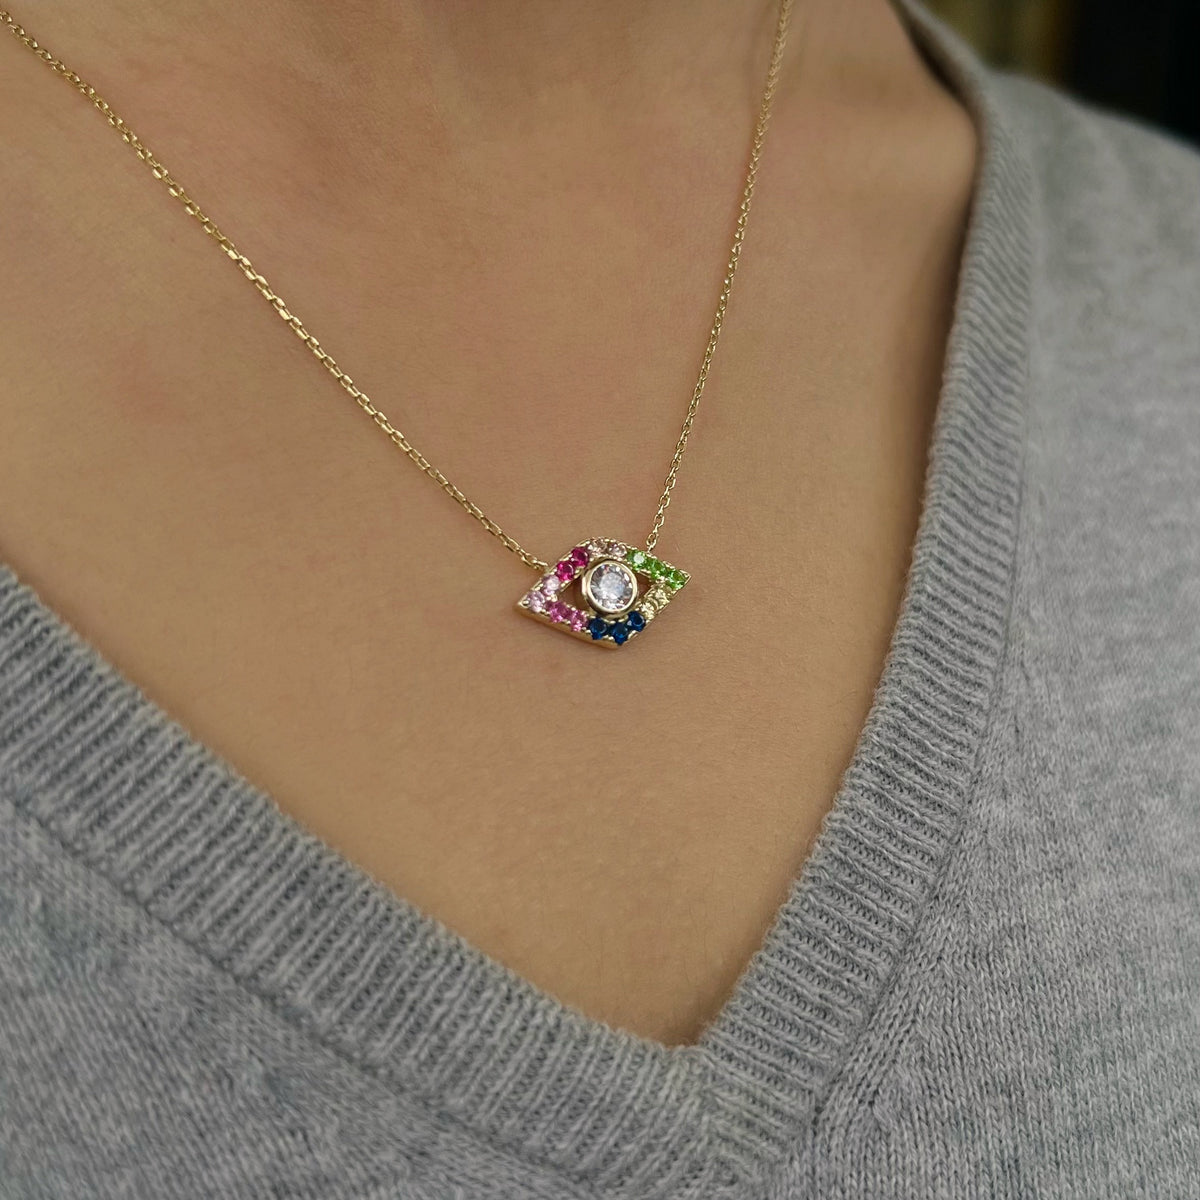 Lara necklace